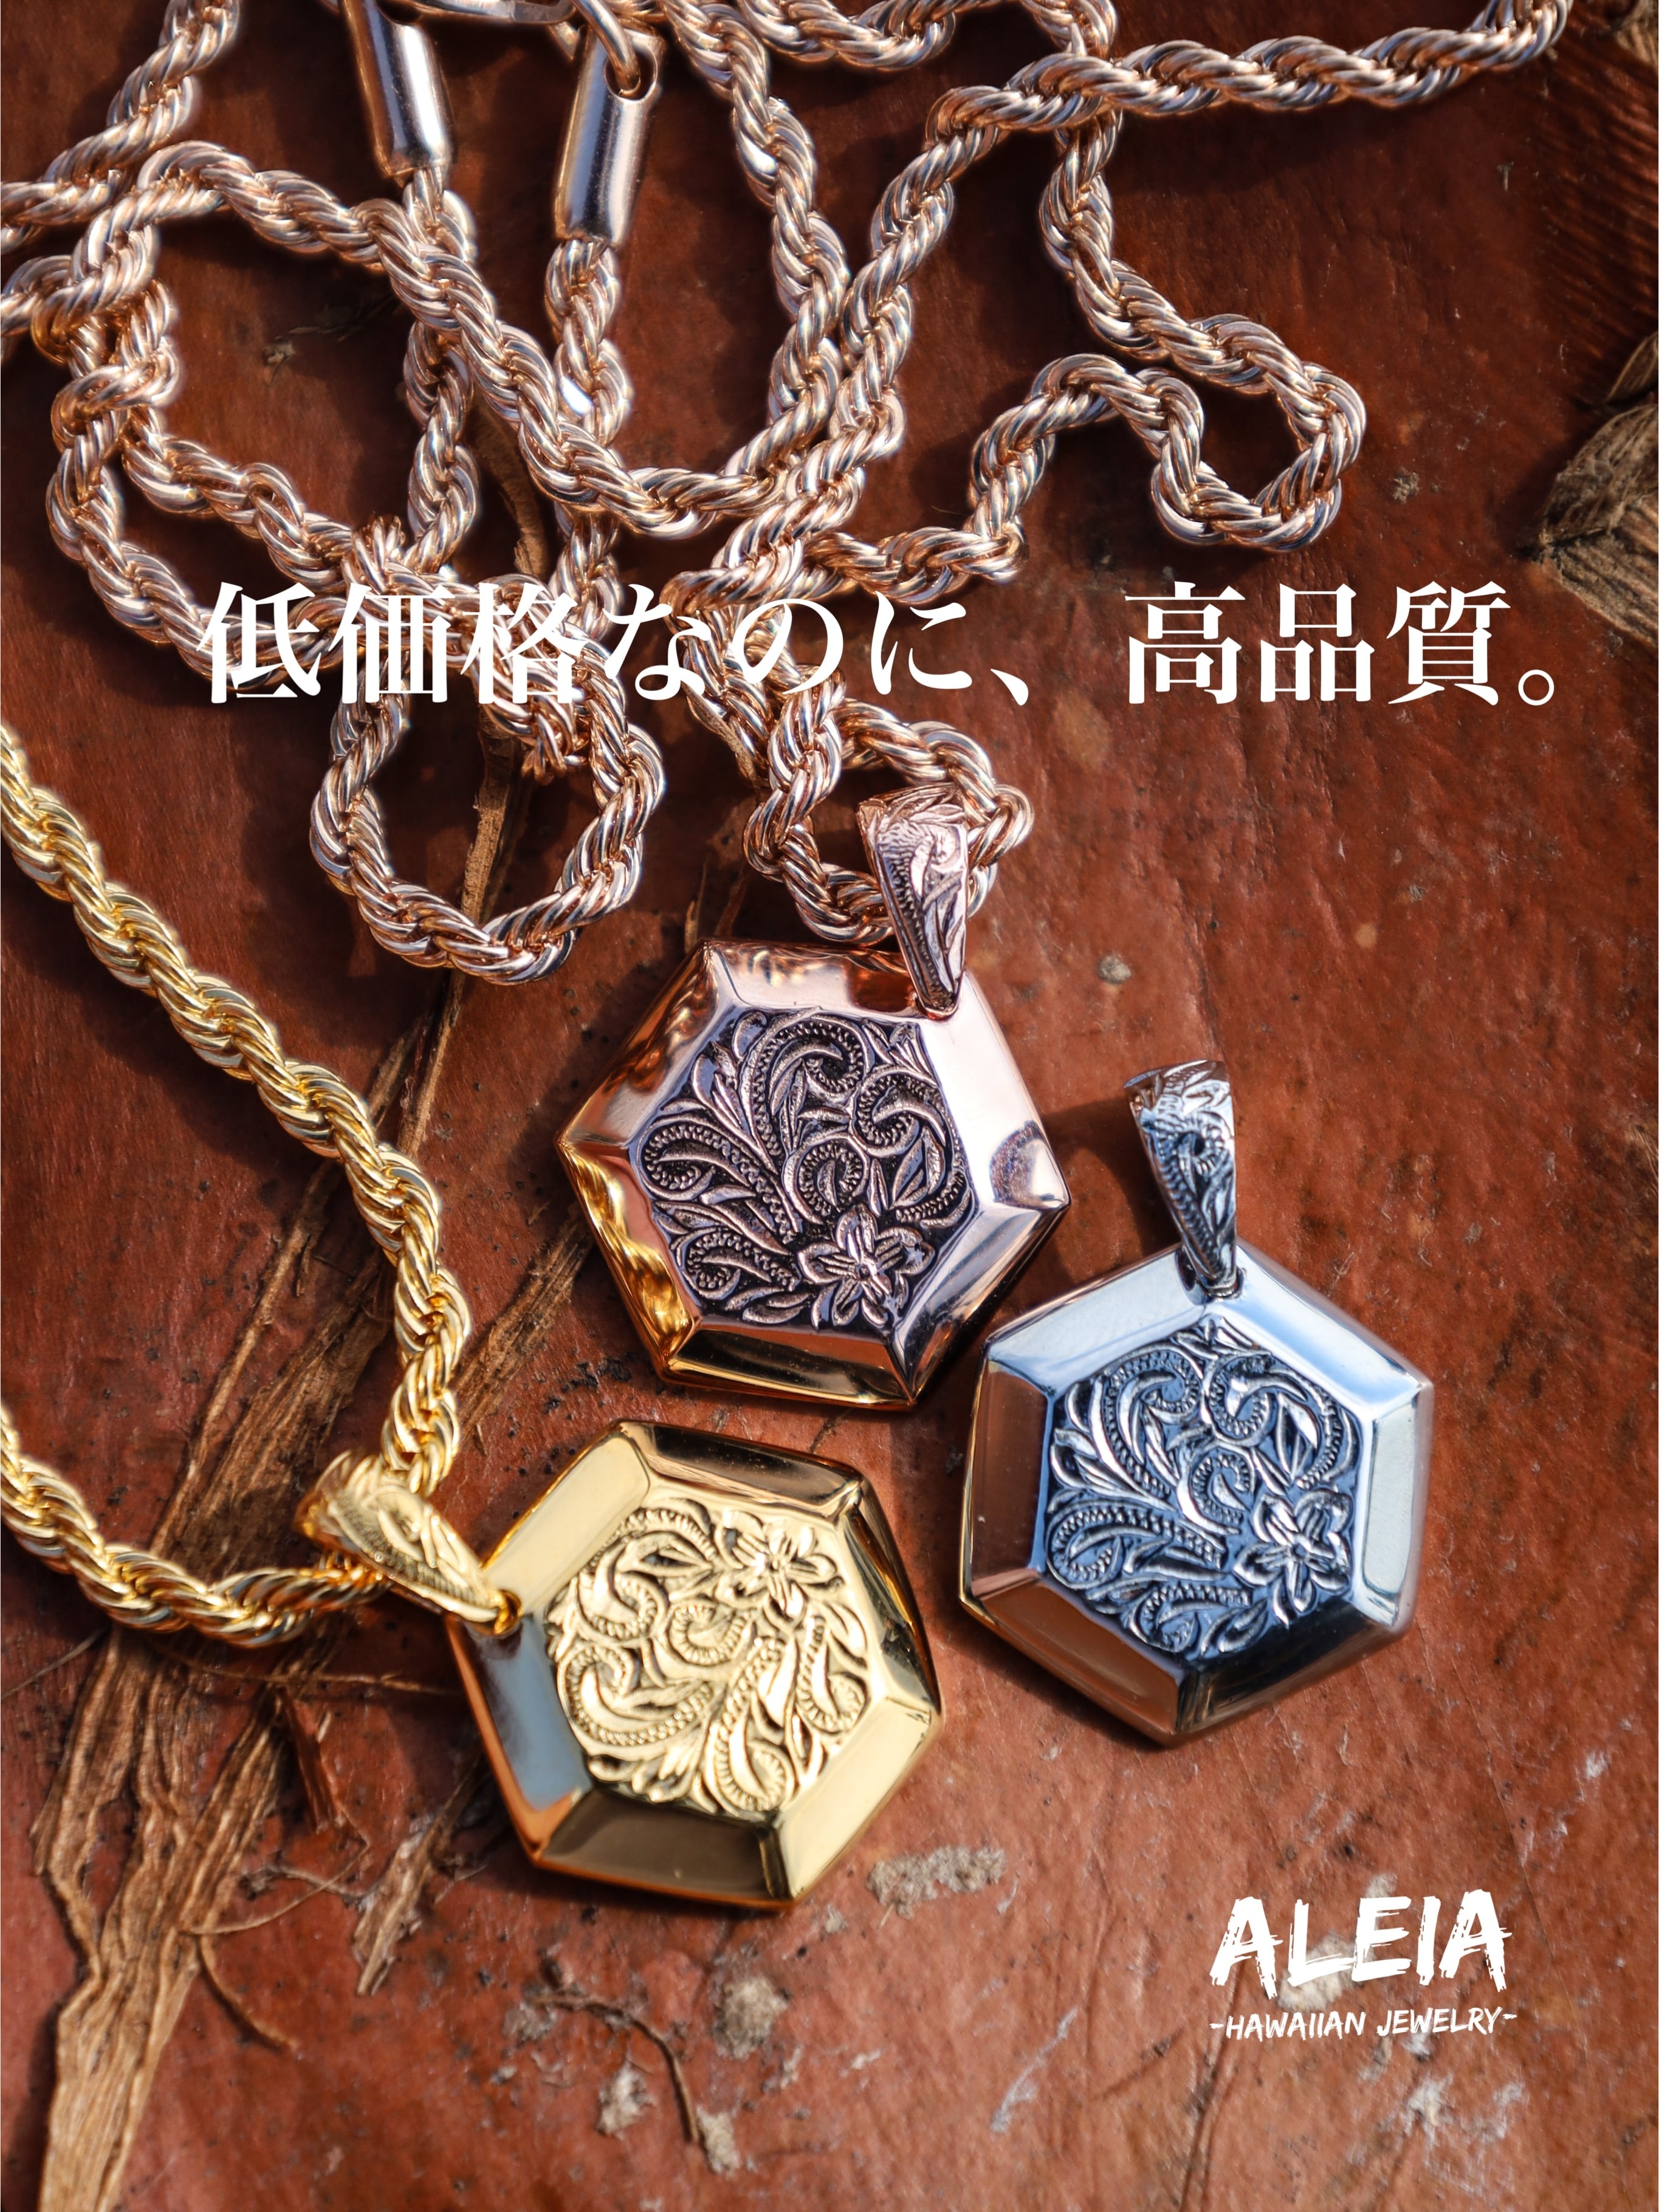 ALEIA Sparkle Stone Necklace [316L]アクセサリー - www